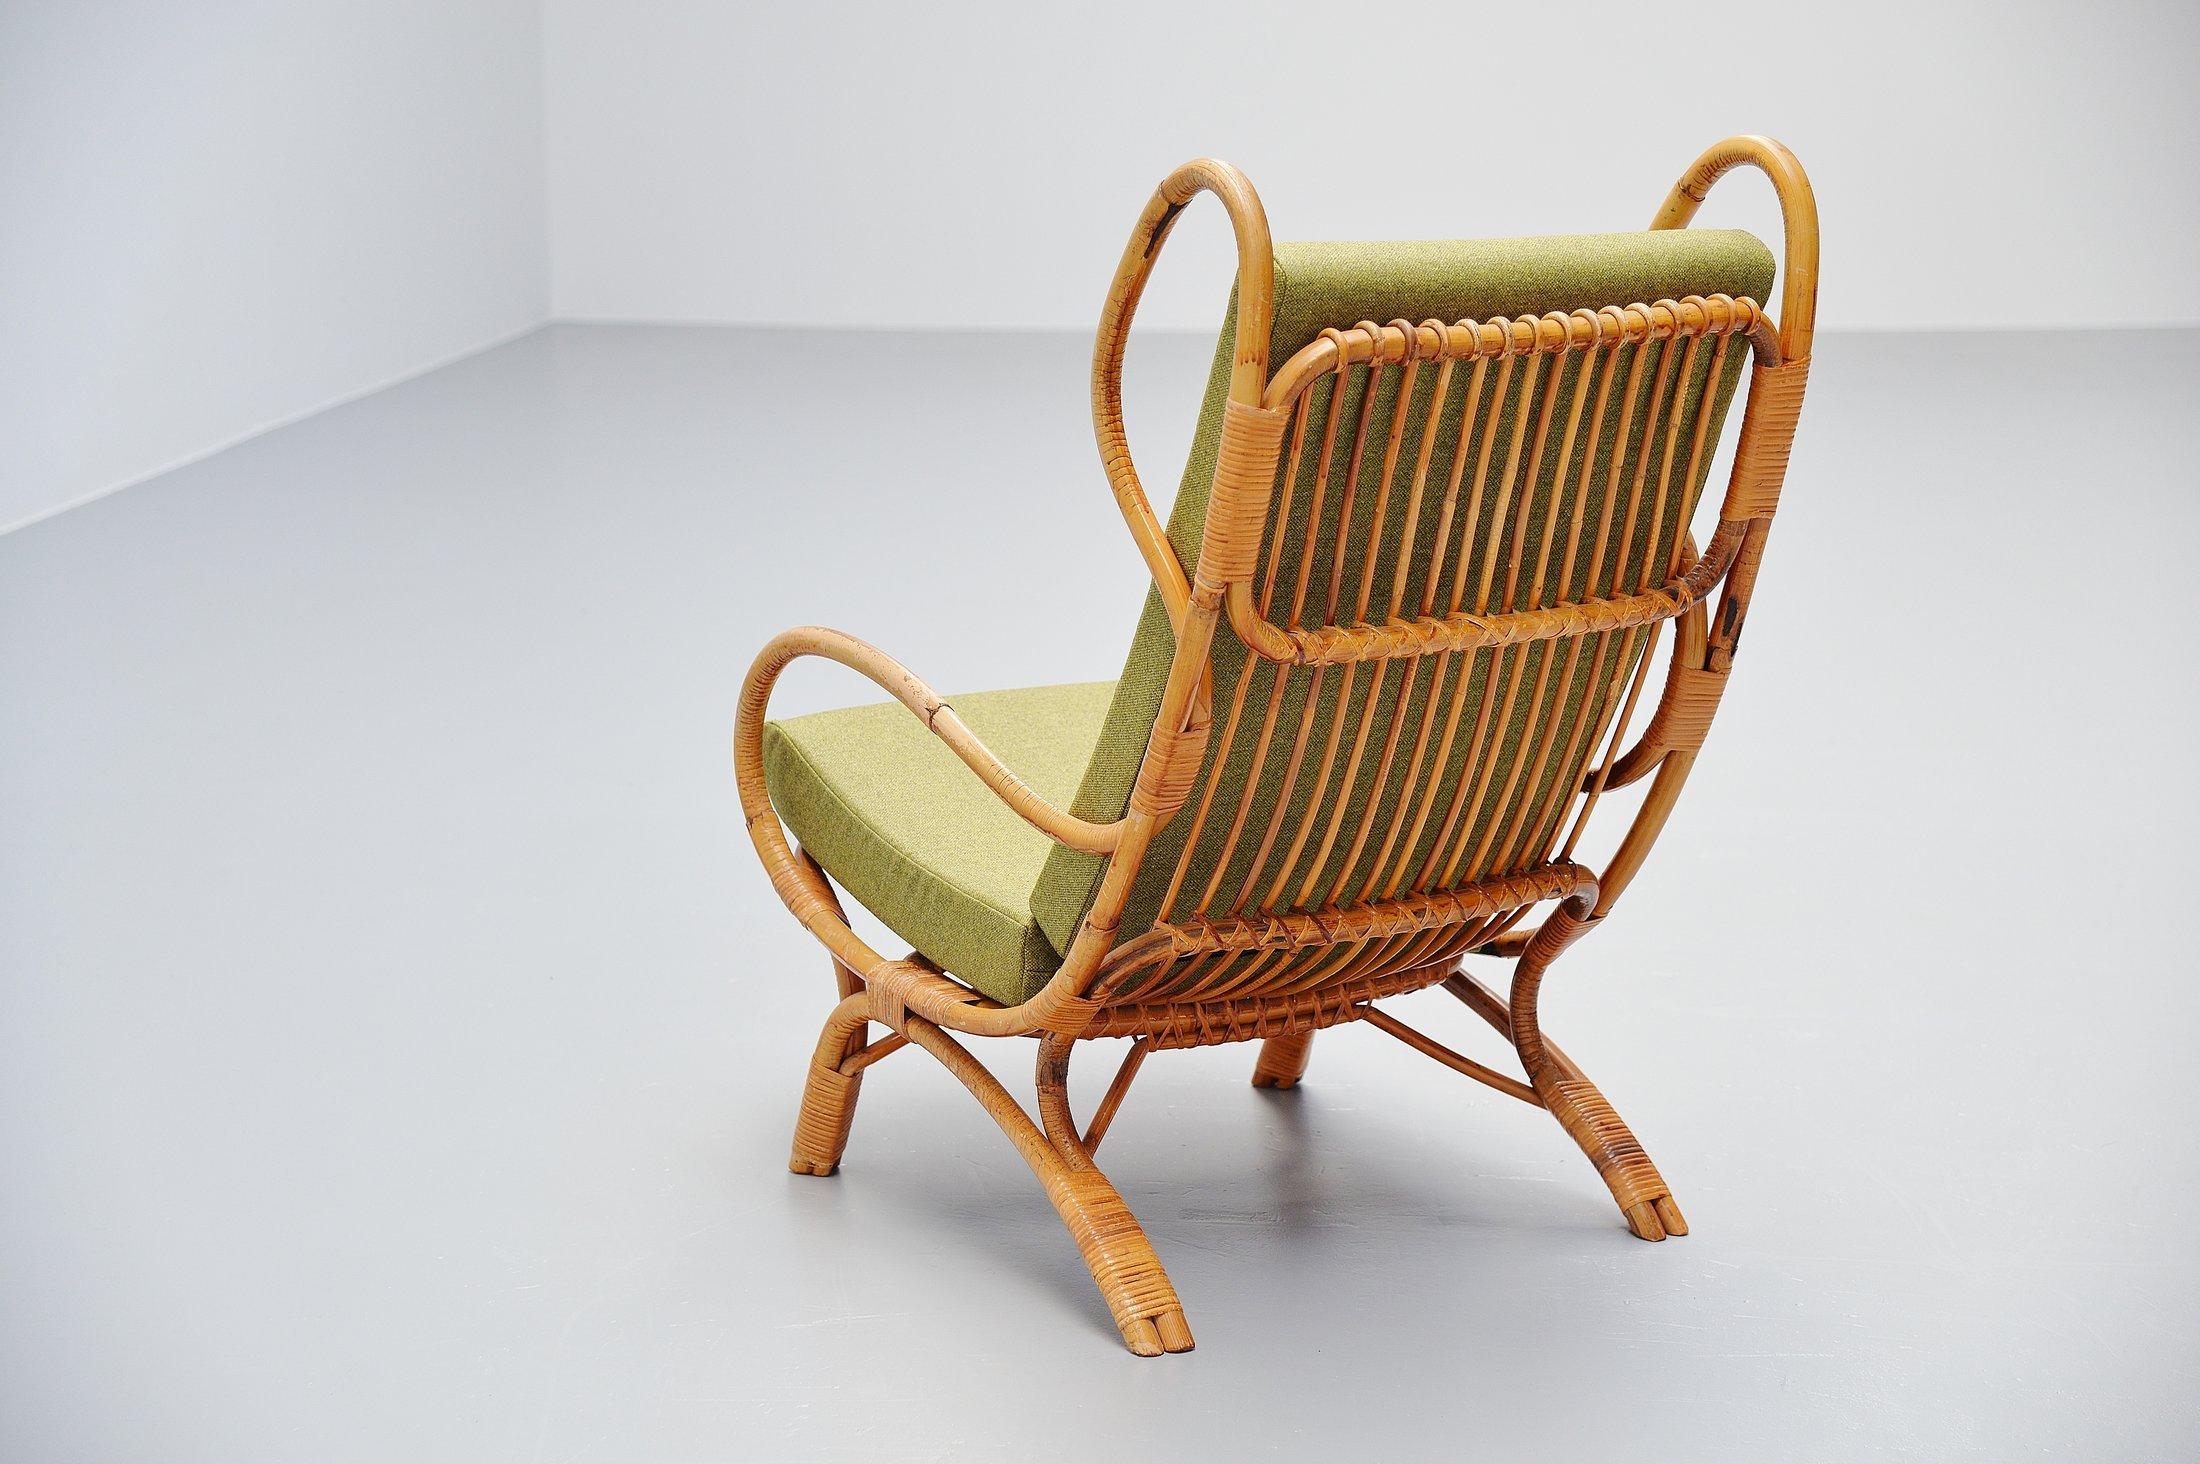 Rattan Gio Ponti Continuum Lounge Chair BP16 Bonacina, Italy, 1963